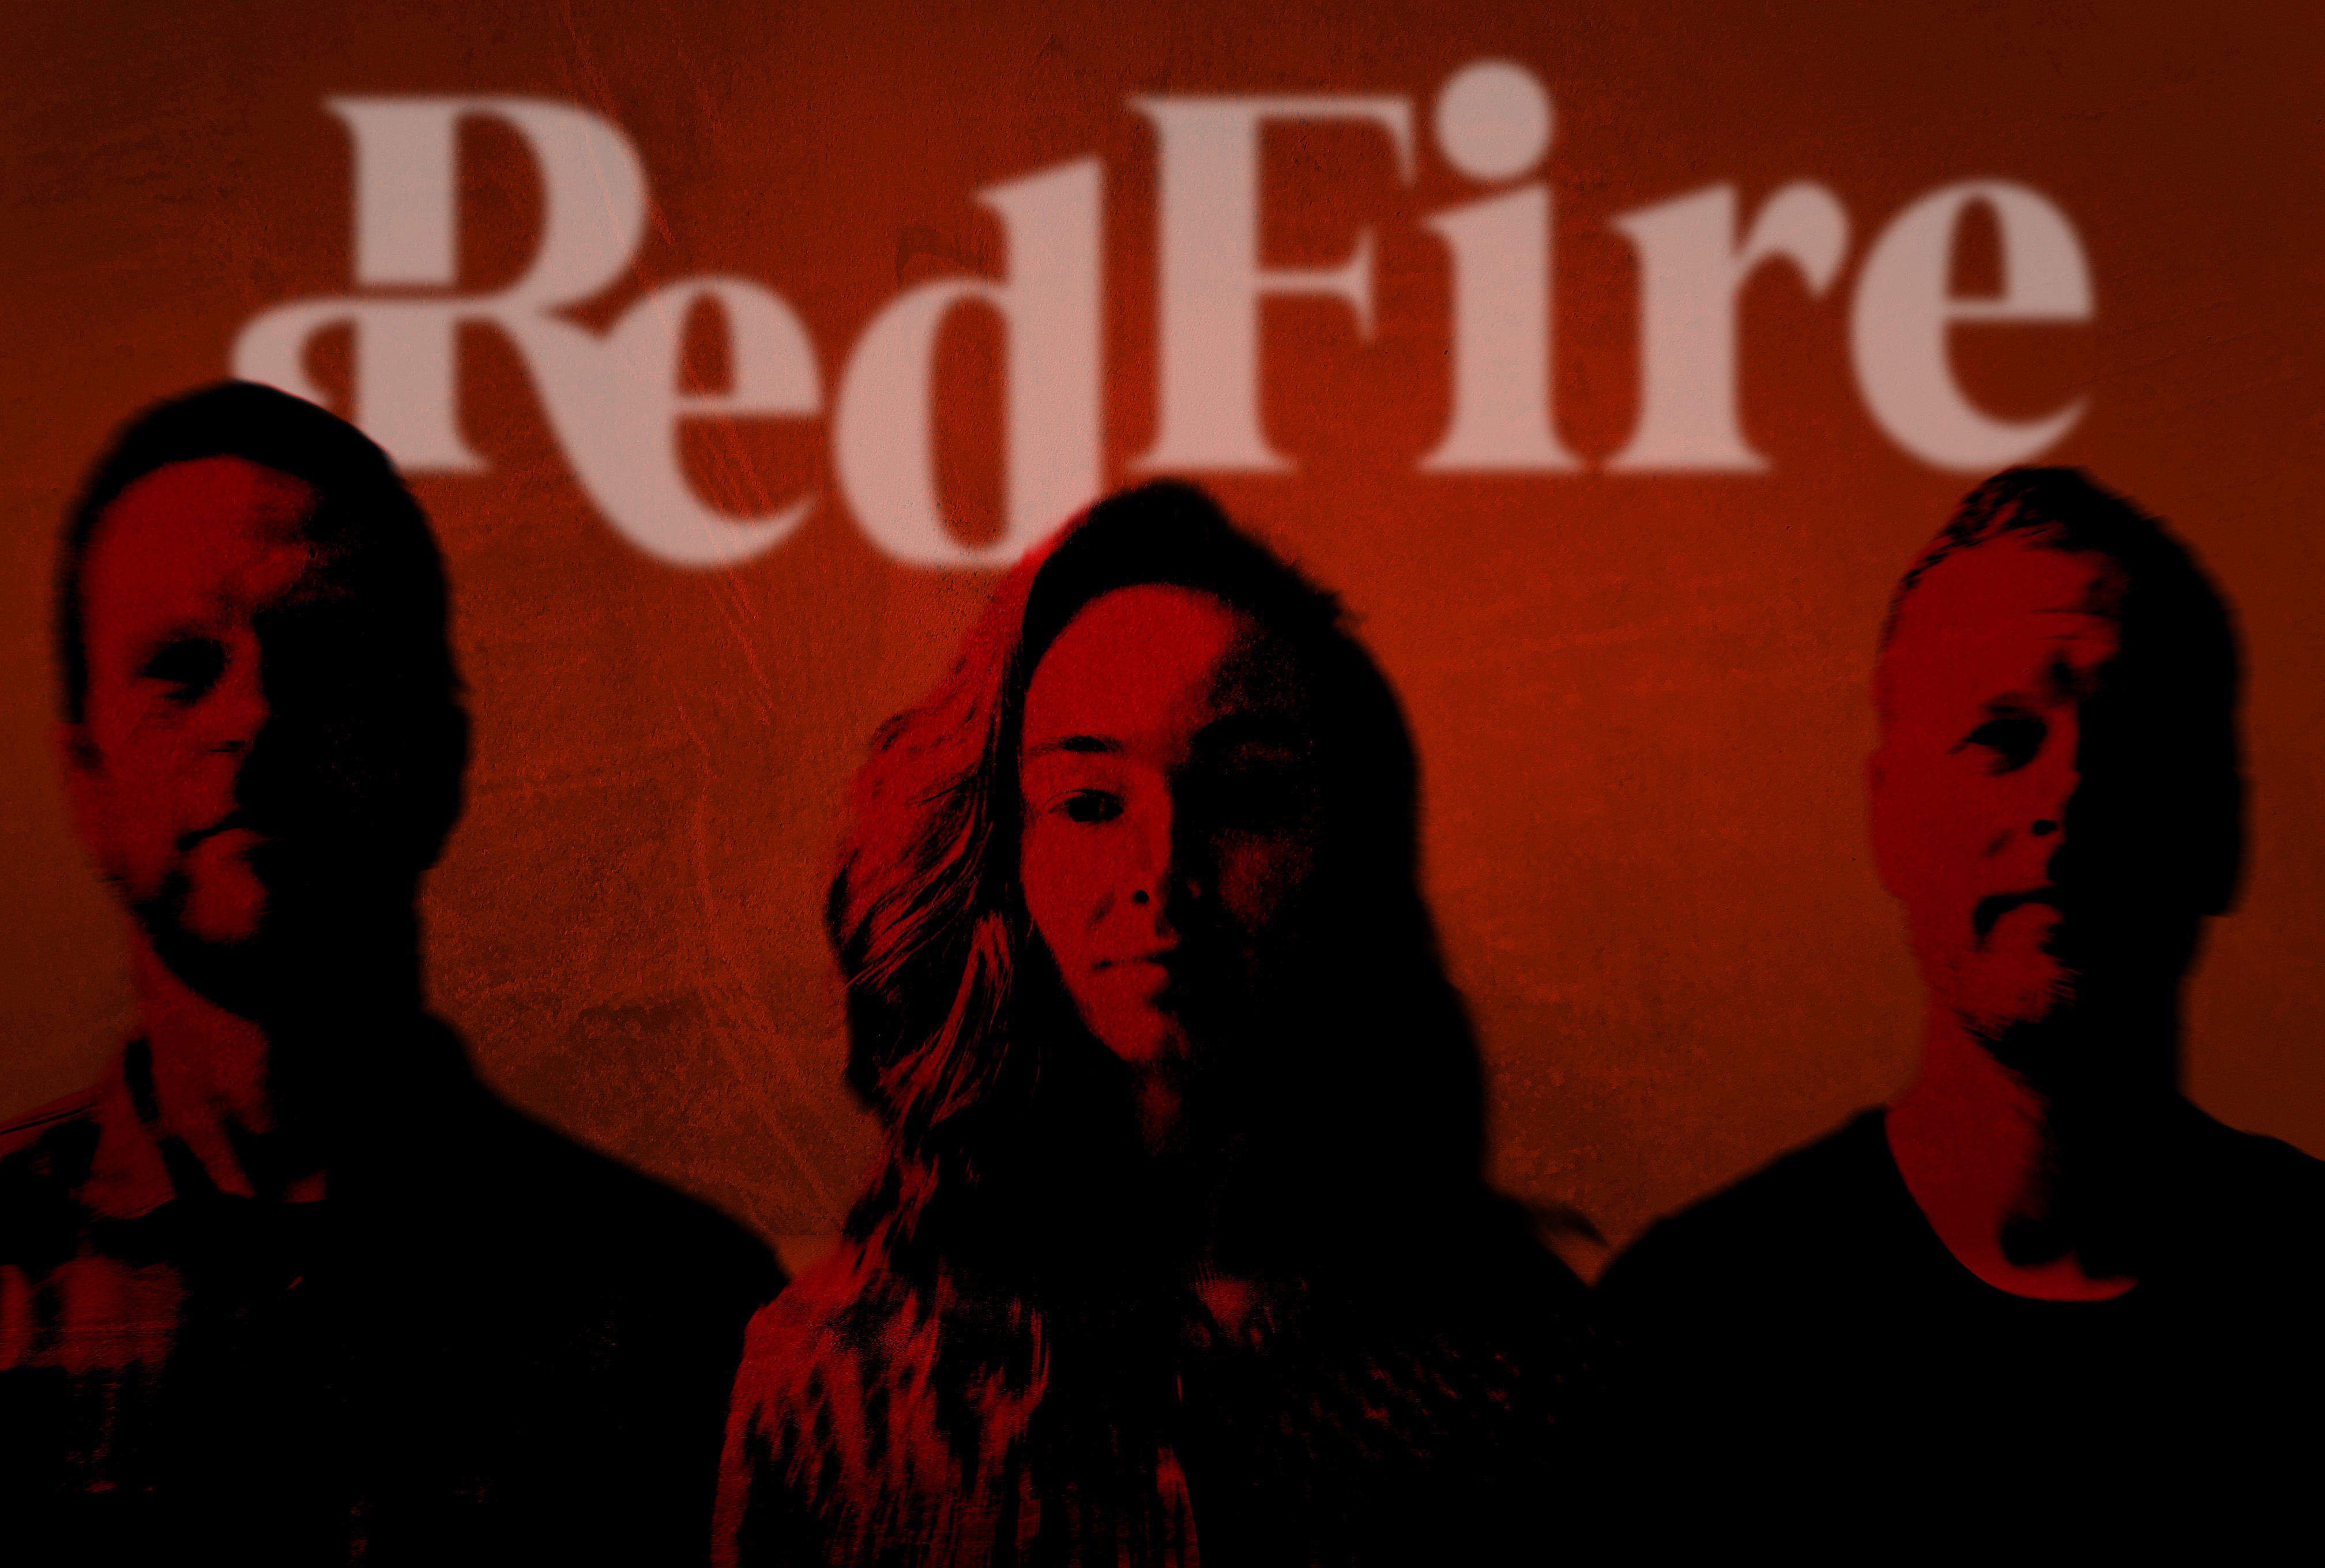 RedFire